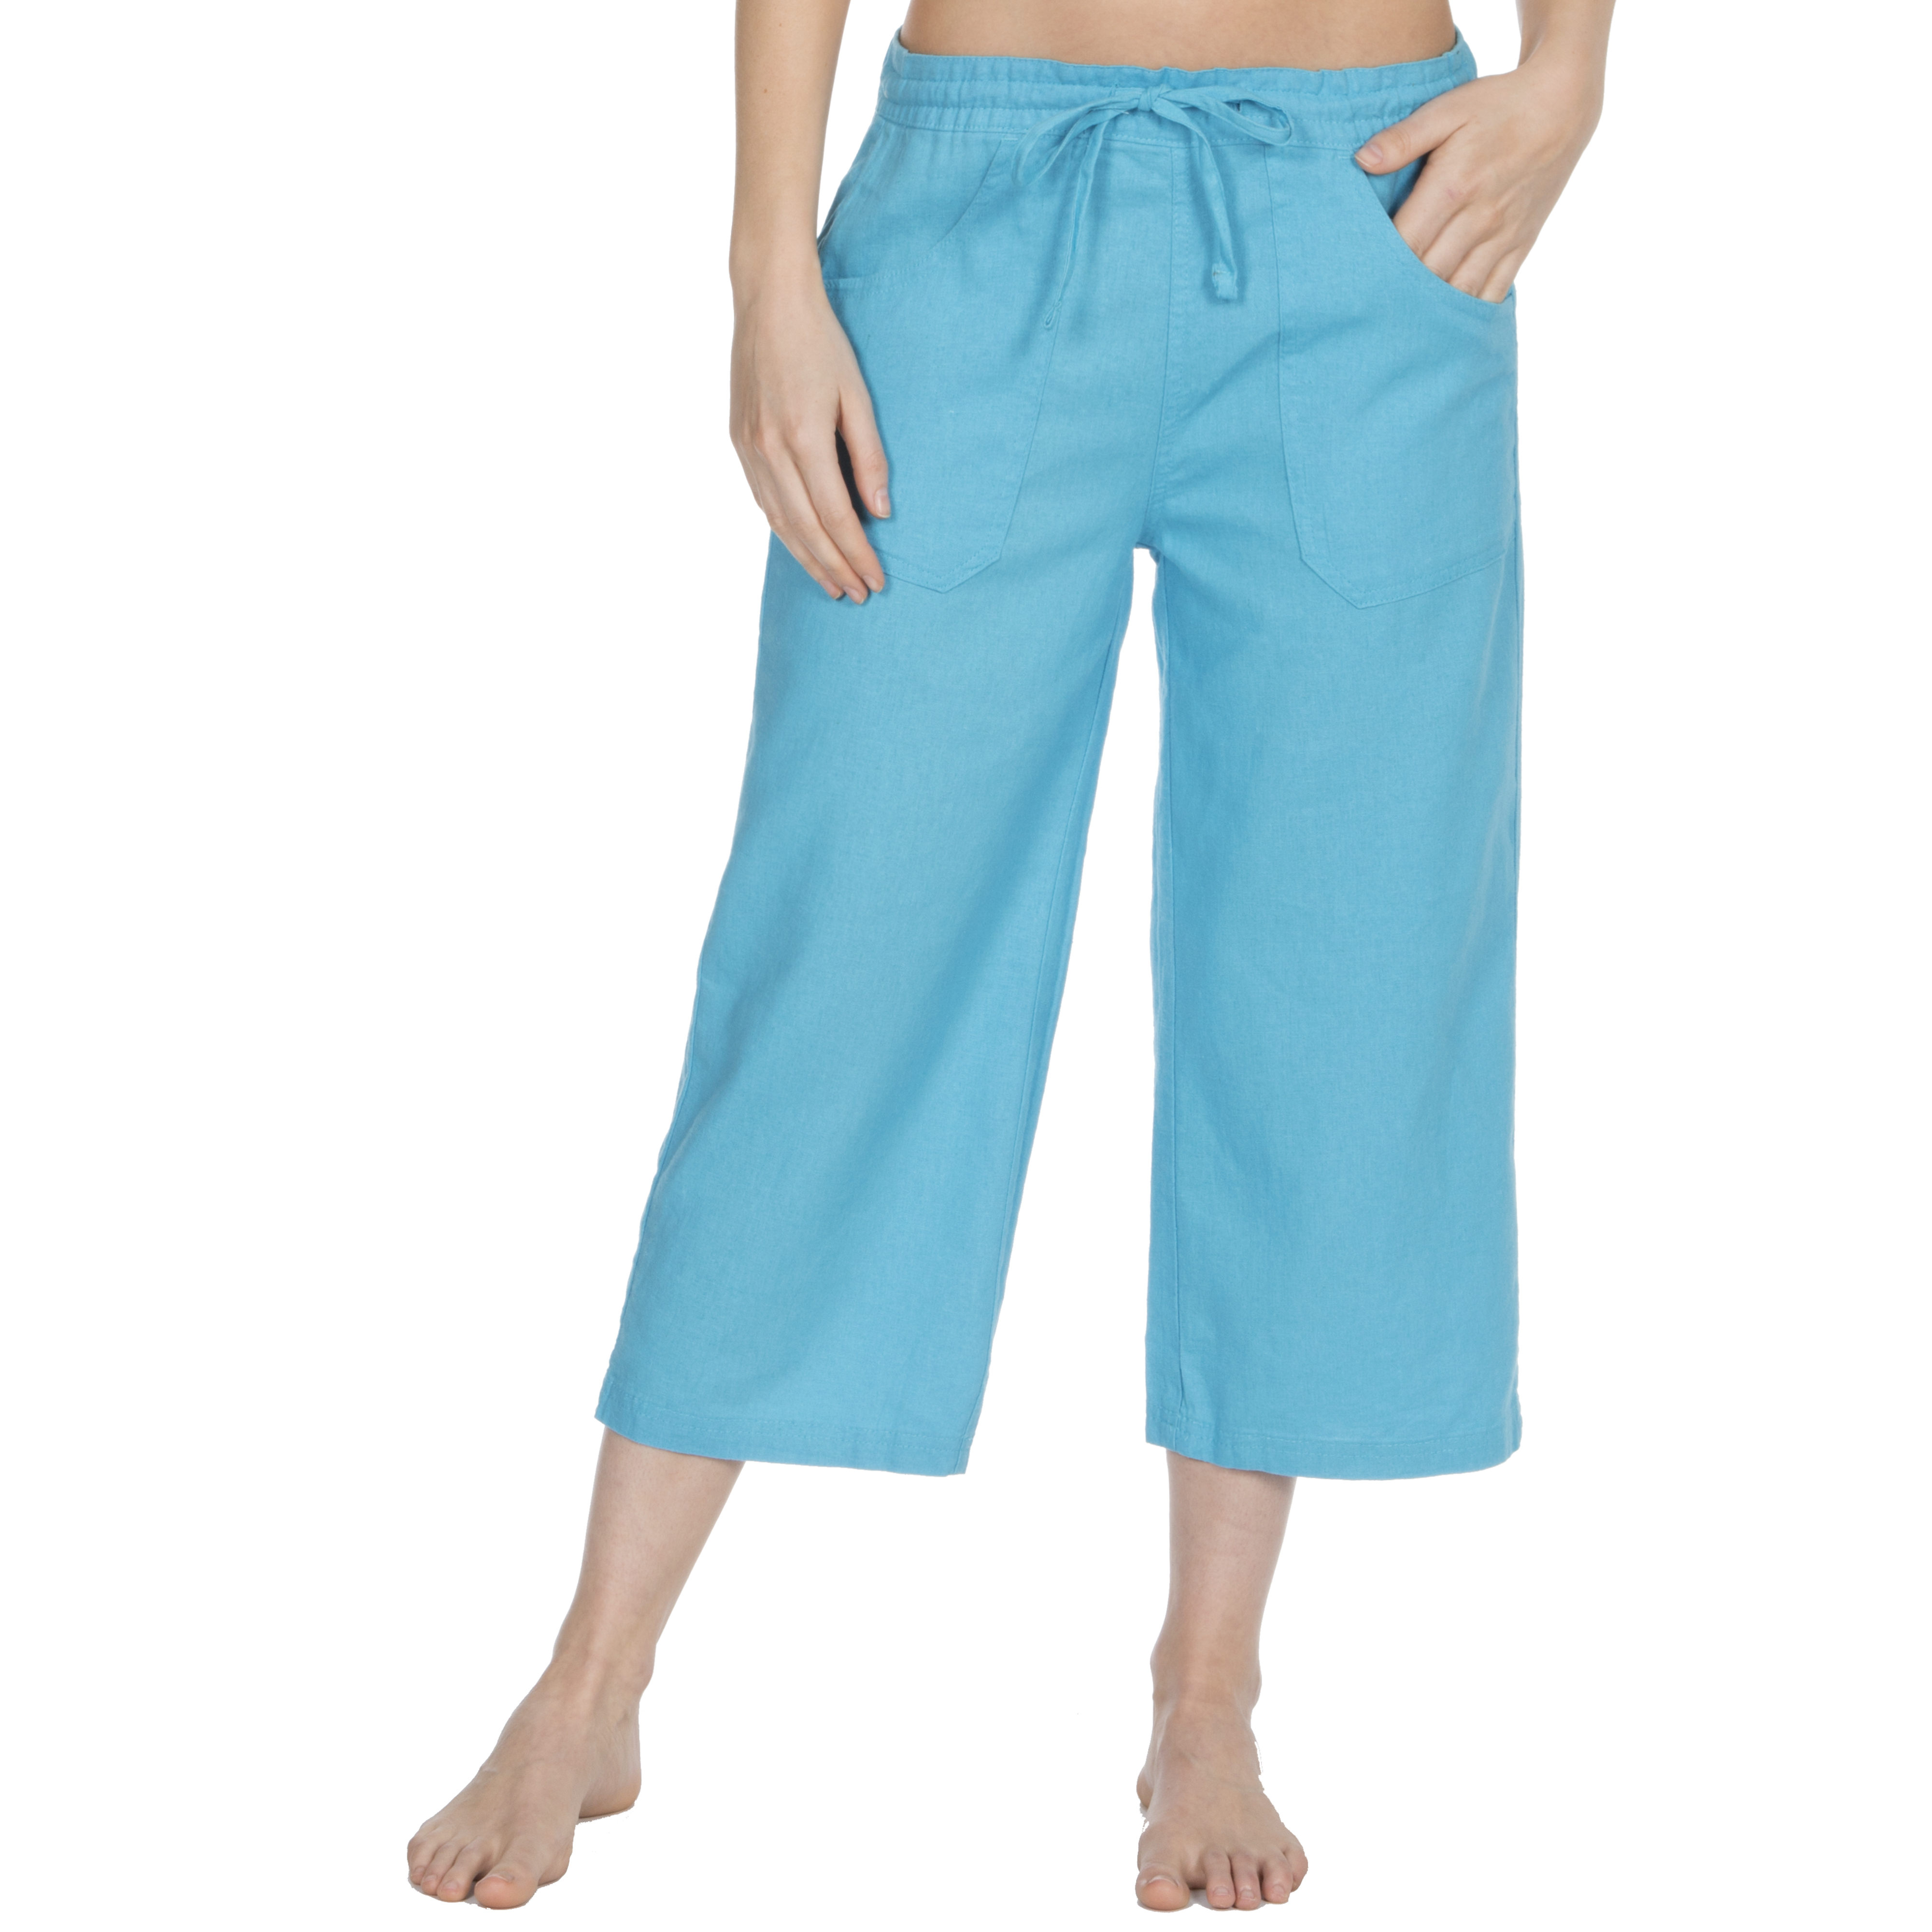 Metzuyan Cropped Linen Capri Pants 3/4 Summer Plus Size 16-24 UK eBay